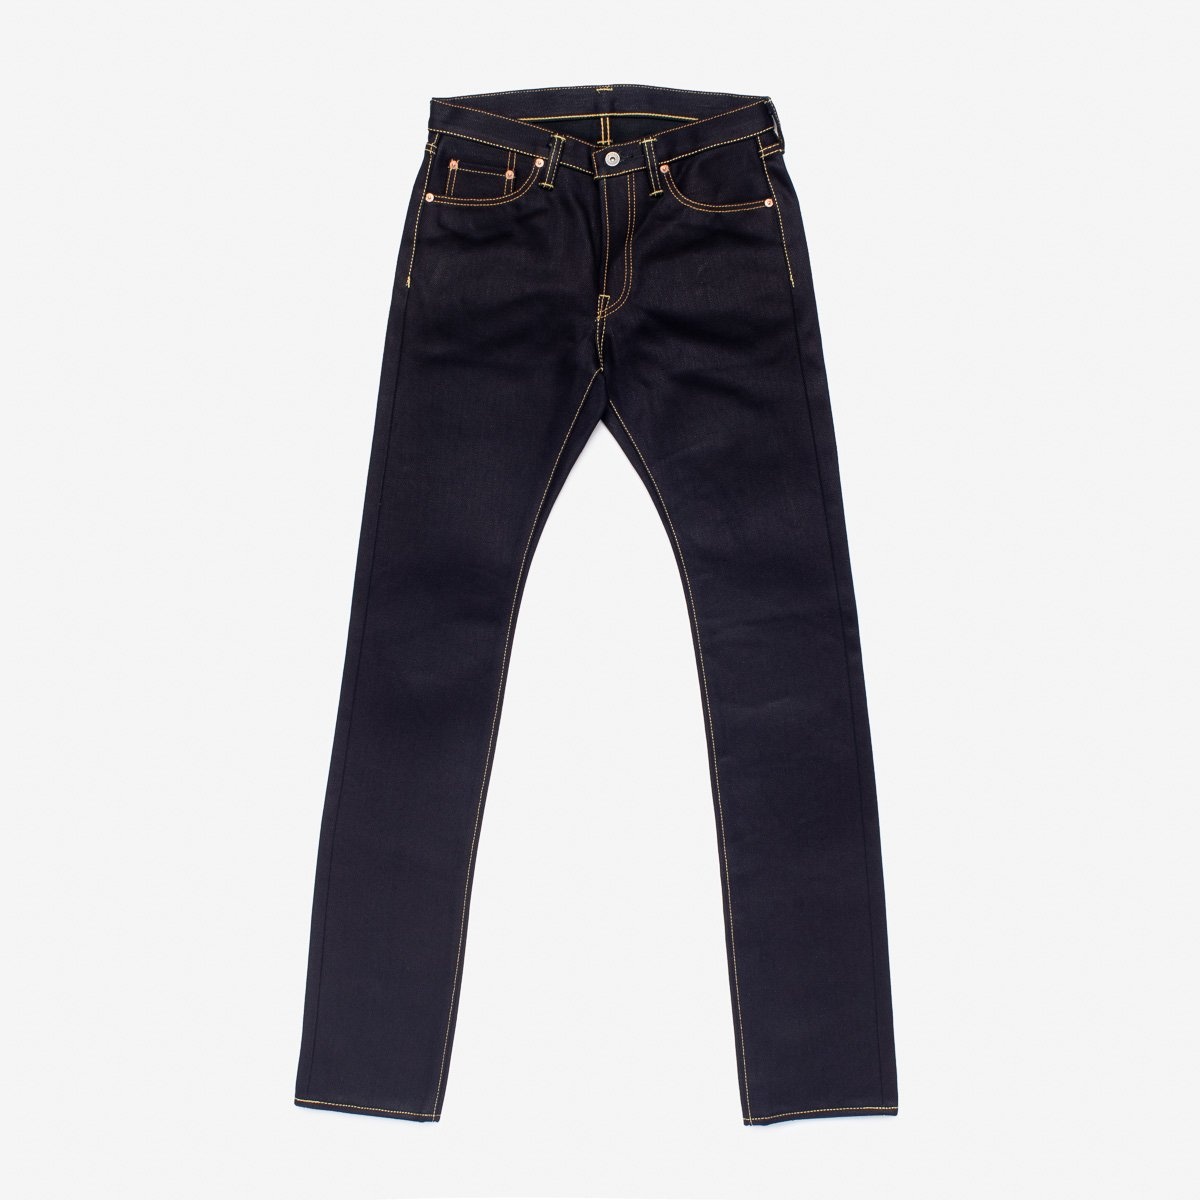 IH-555-XHSib 25oz Selvedge Denim Super Slim Cut Jeans - Indigo/Black - 1